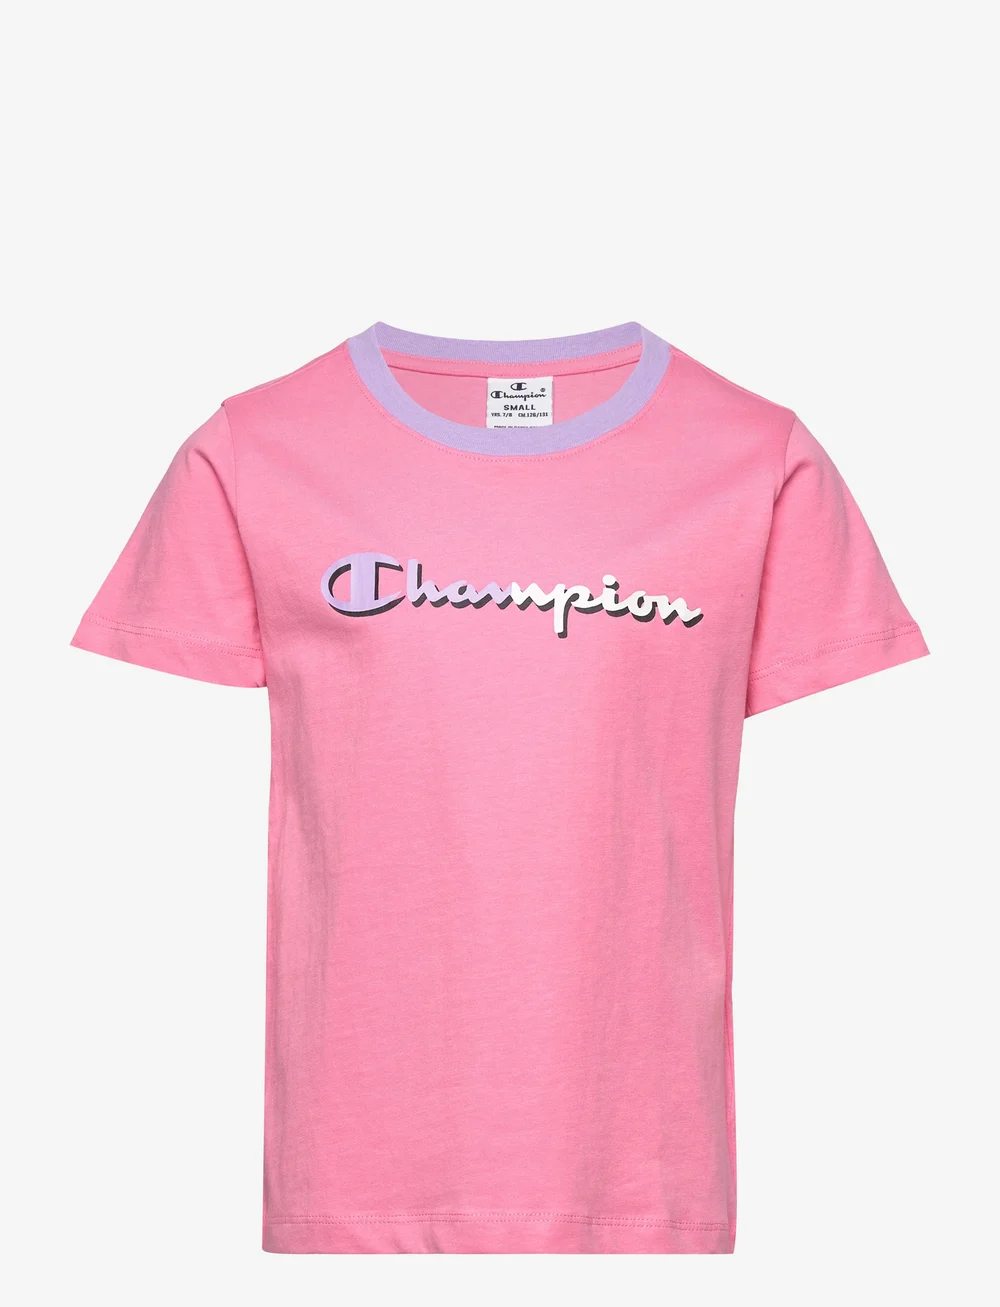 Switzerland - T-shirt Crewneck Champion Boozt.com